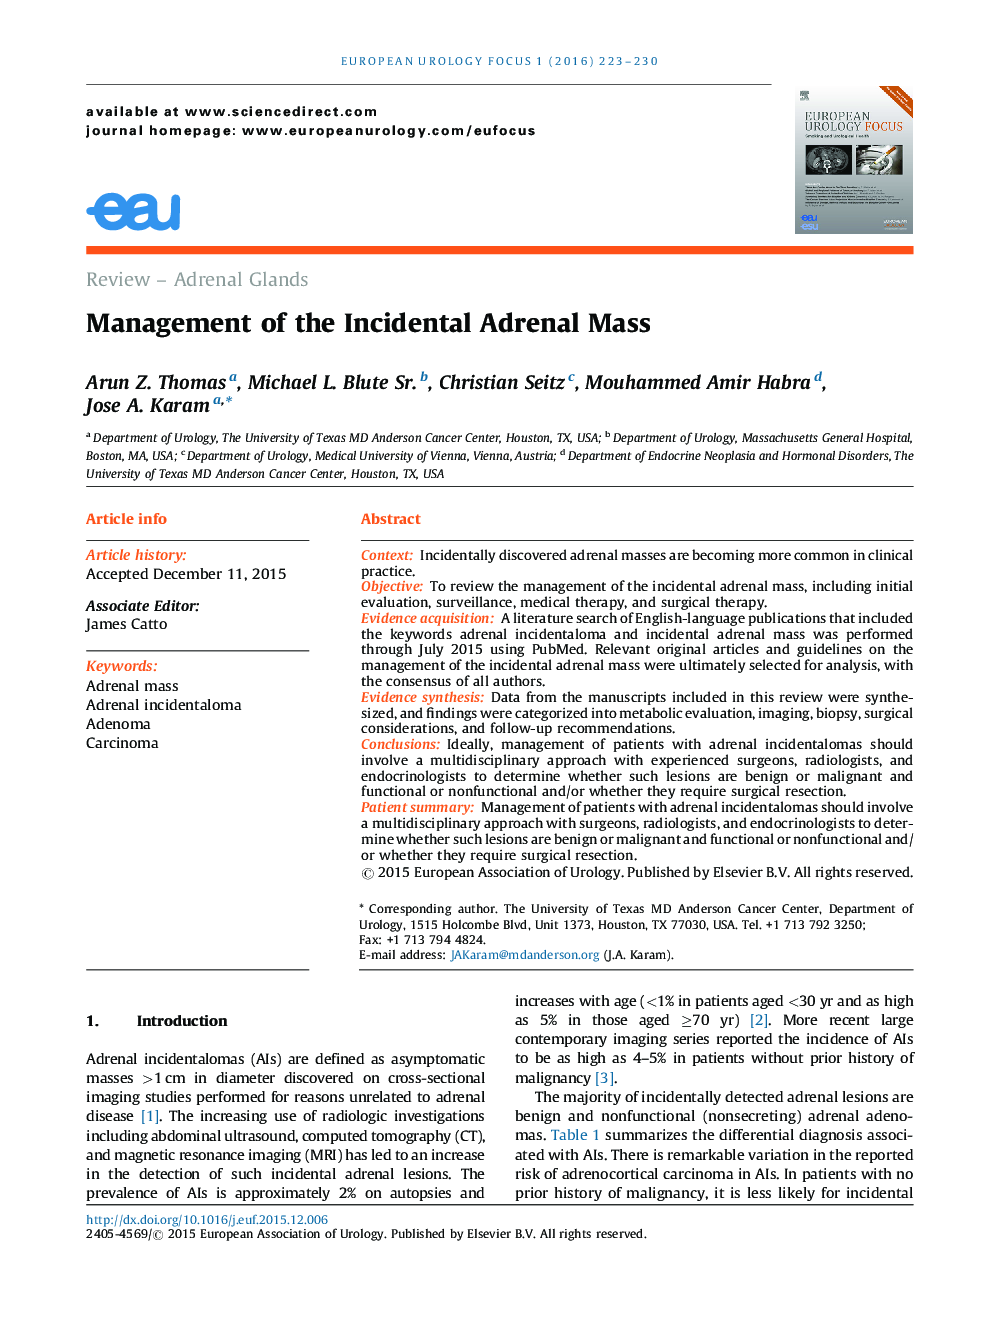 Management of the Incidental Adrenal Mass